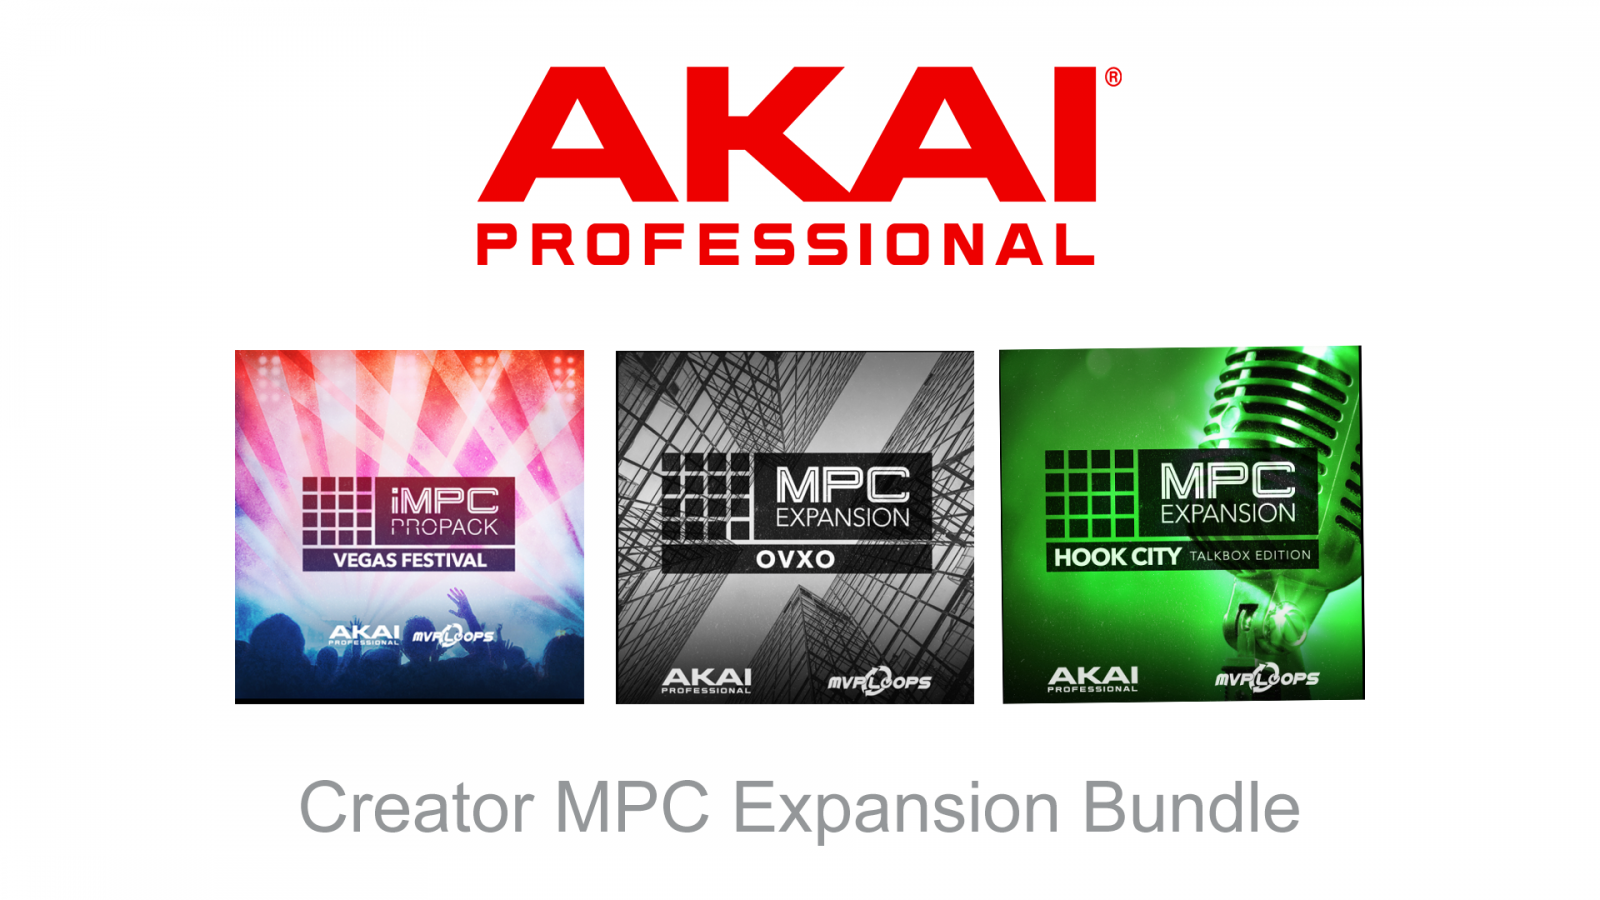 Akai expansion packs